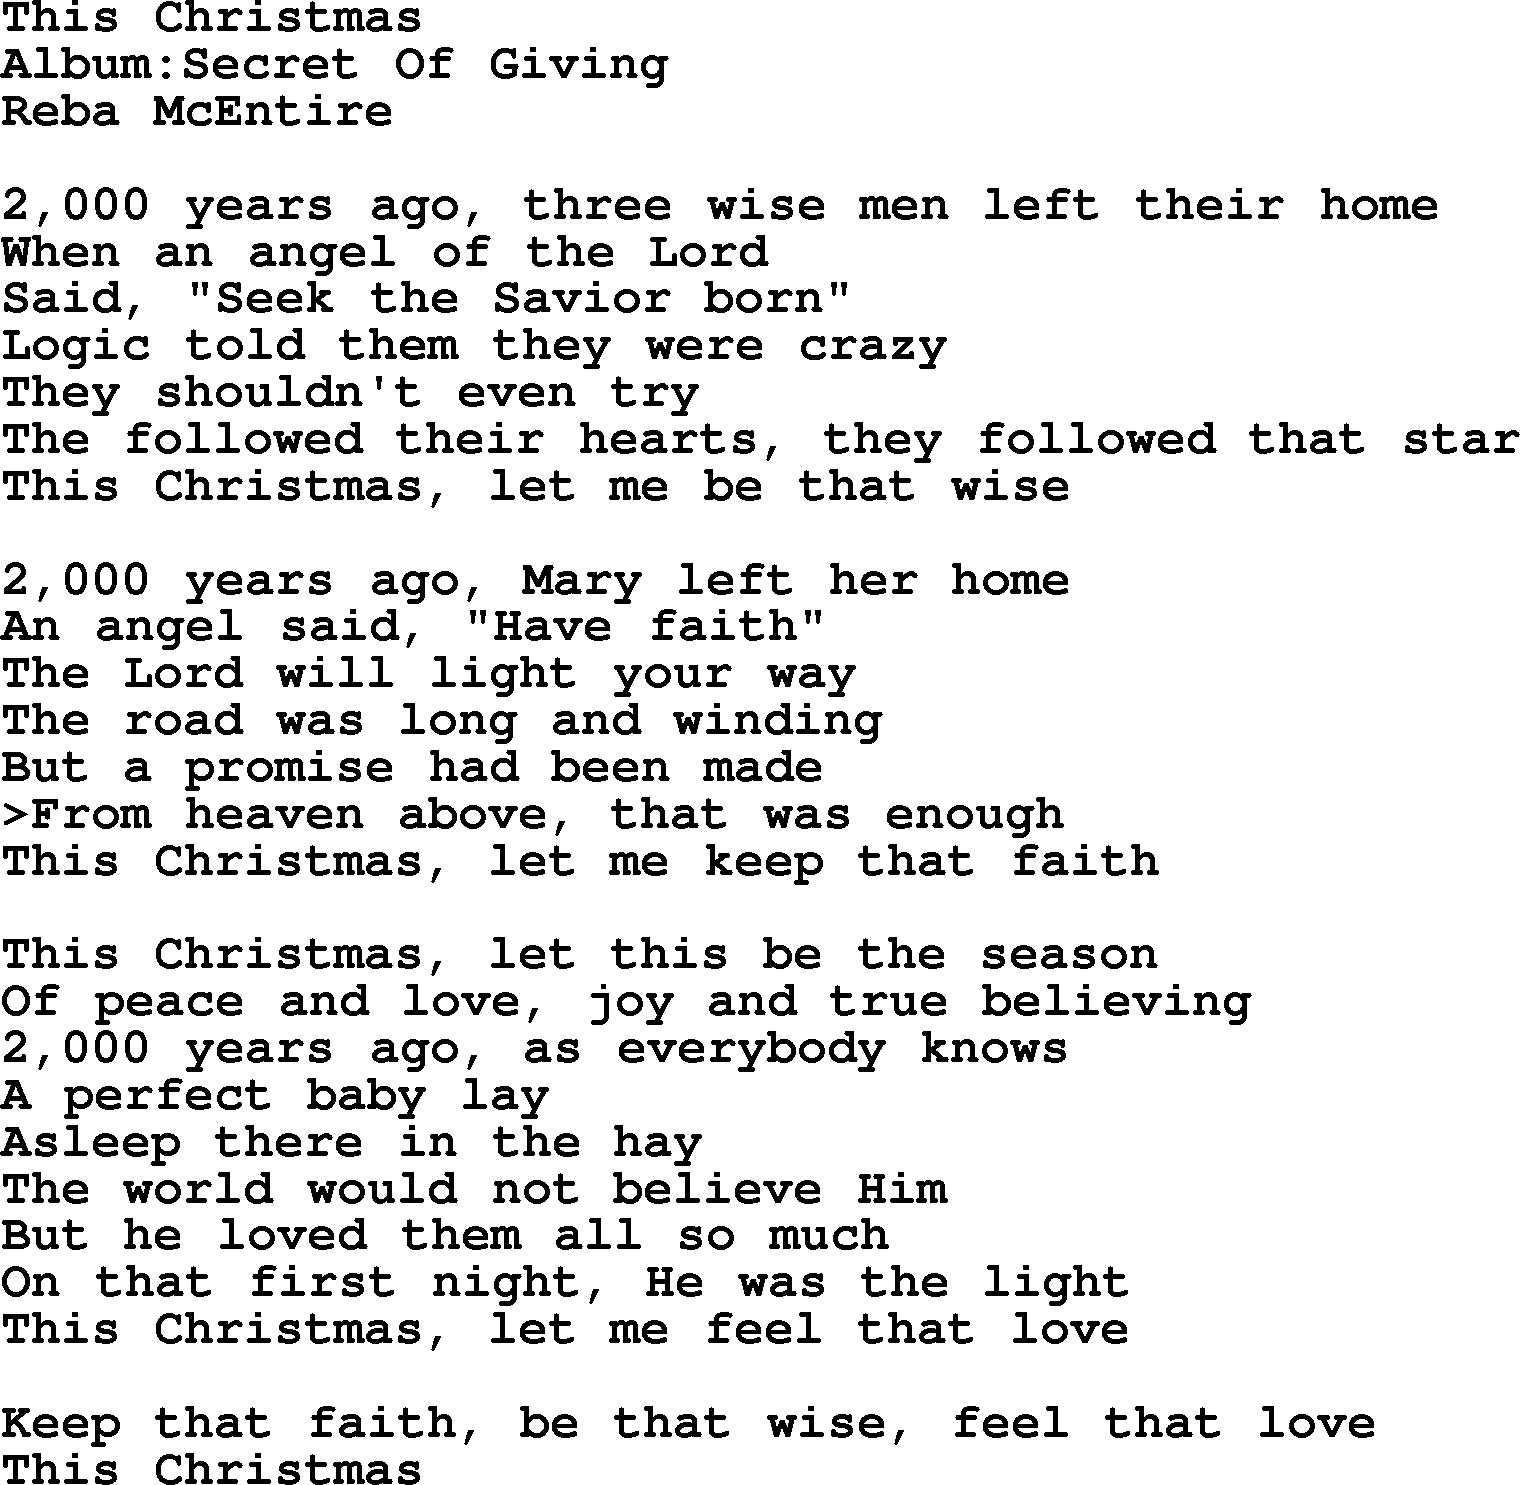 Reba McEntire song: This Christmas lyrics